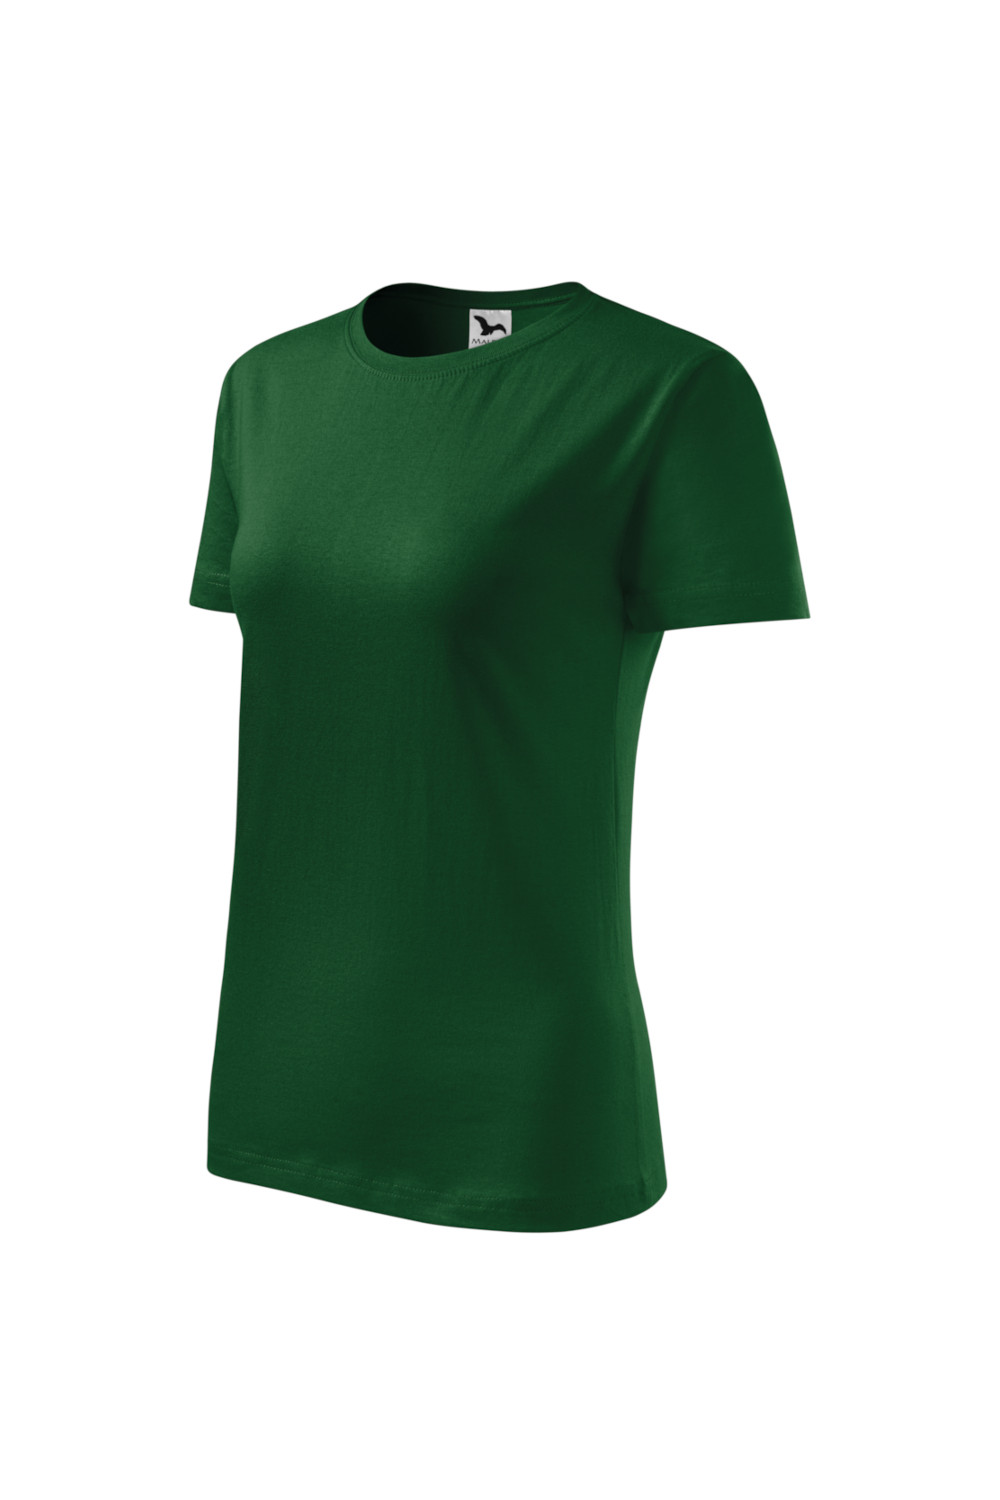 CLASSIC 133 MALFINI Koszulka damska 100% bawełna t-shirt ciemna zieleń